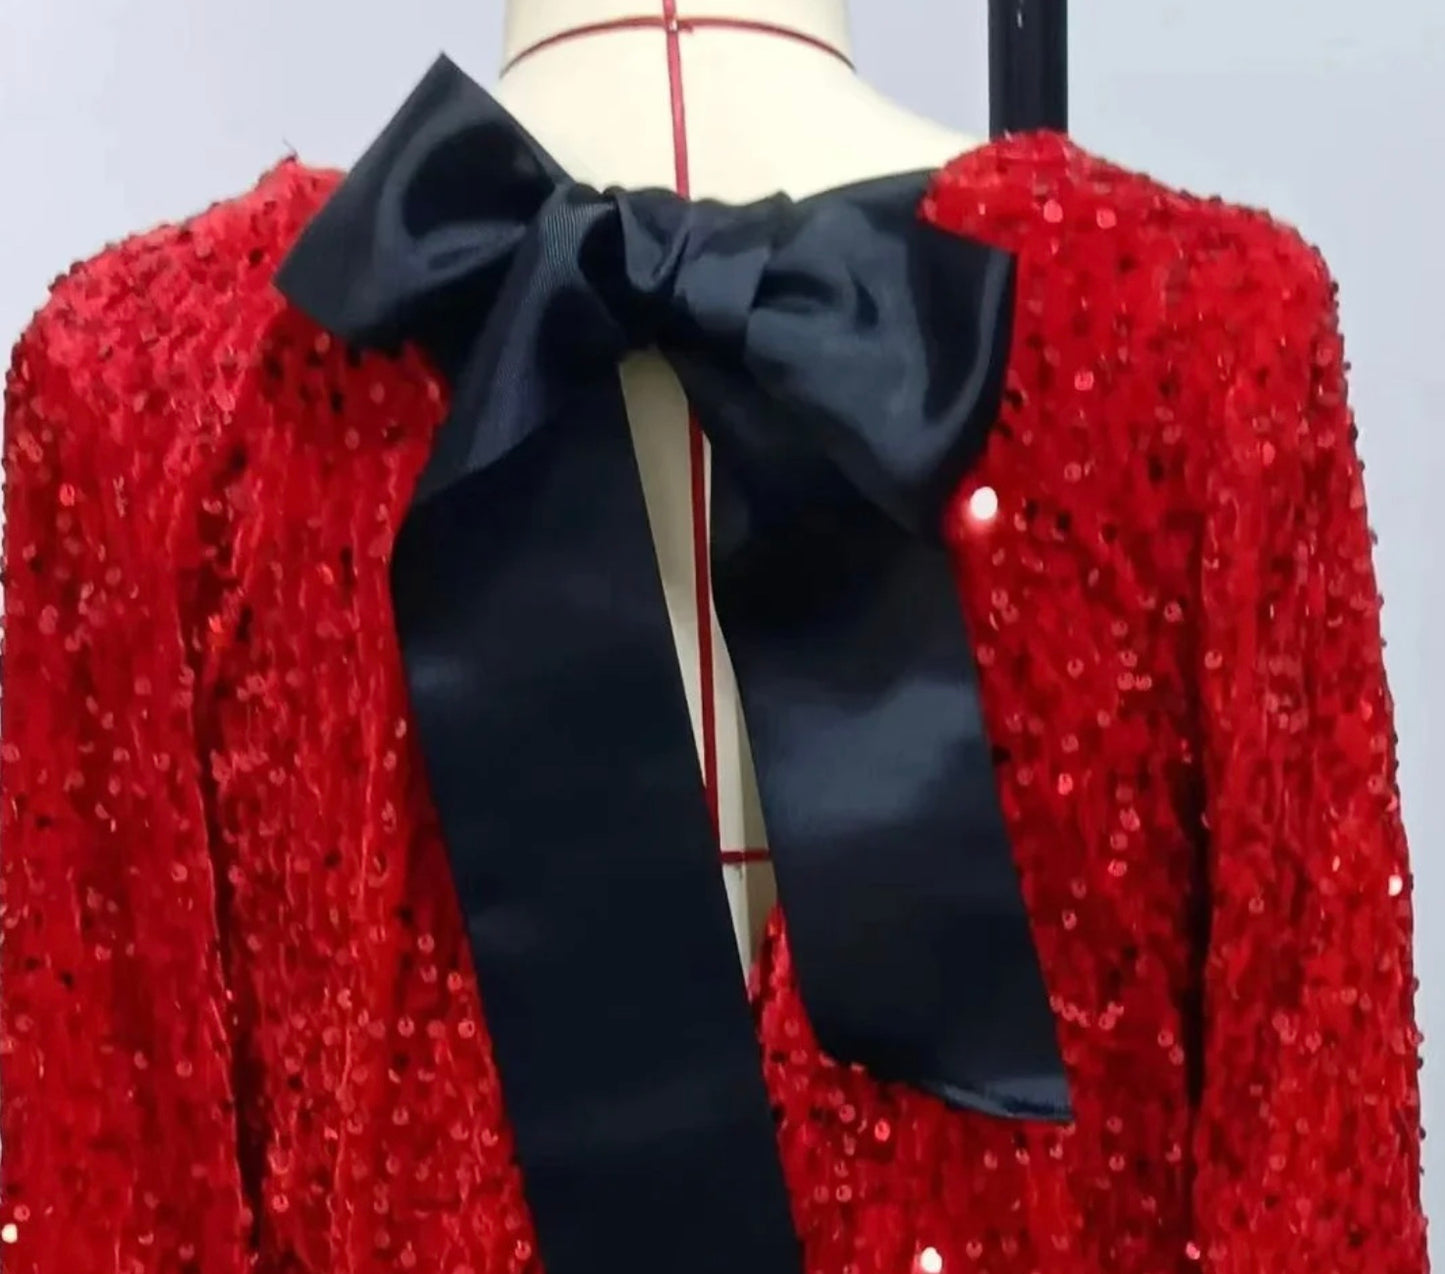 Amanda-Bow Sequin Long Sleeve Christmas Mini Dress